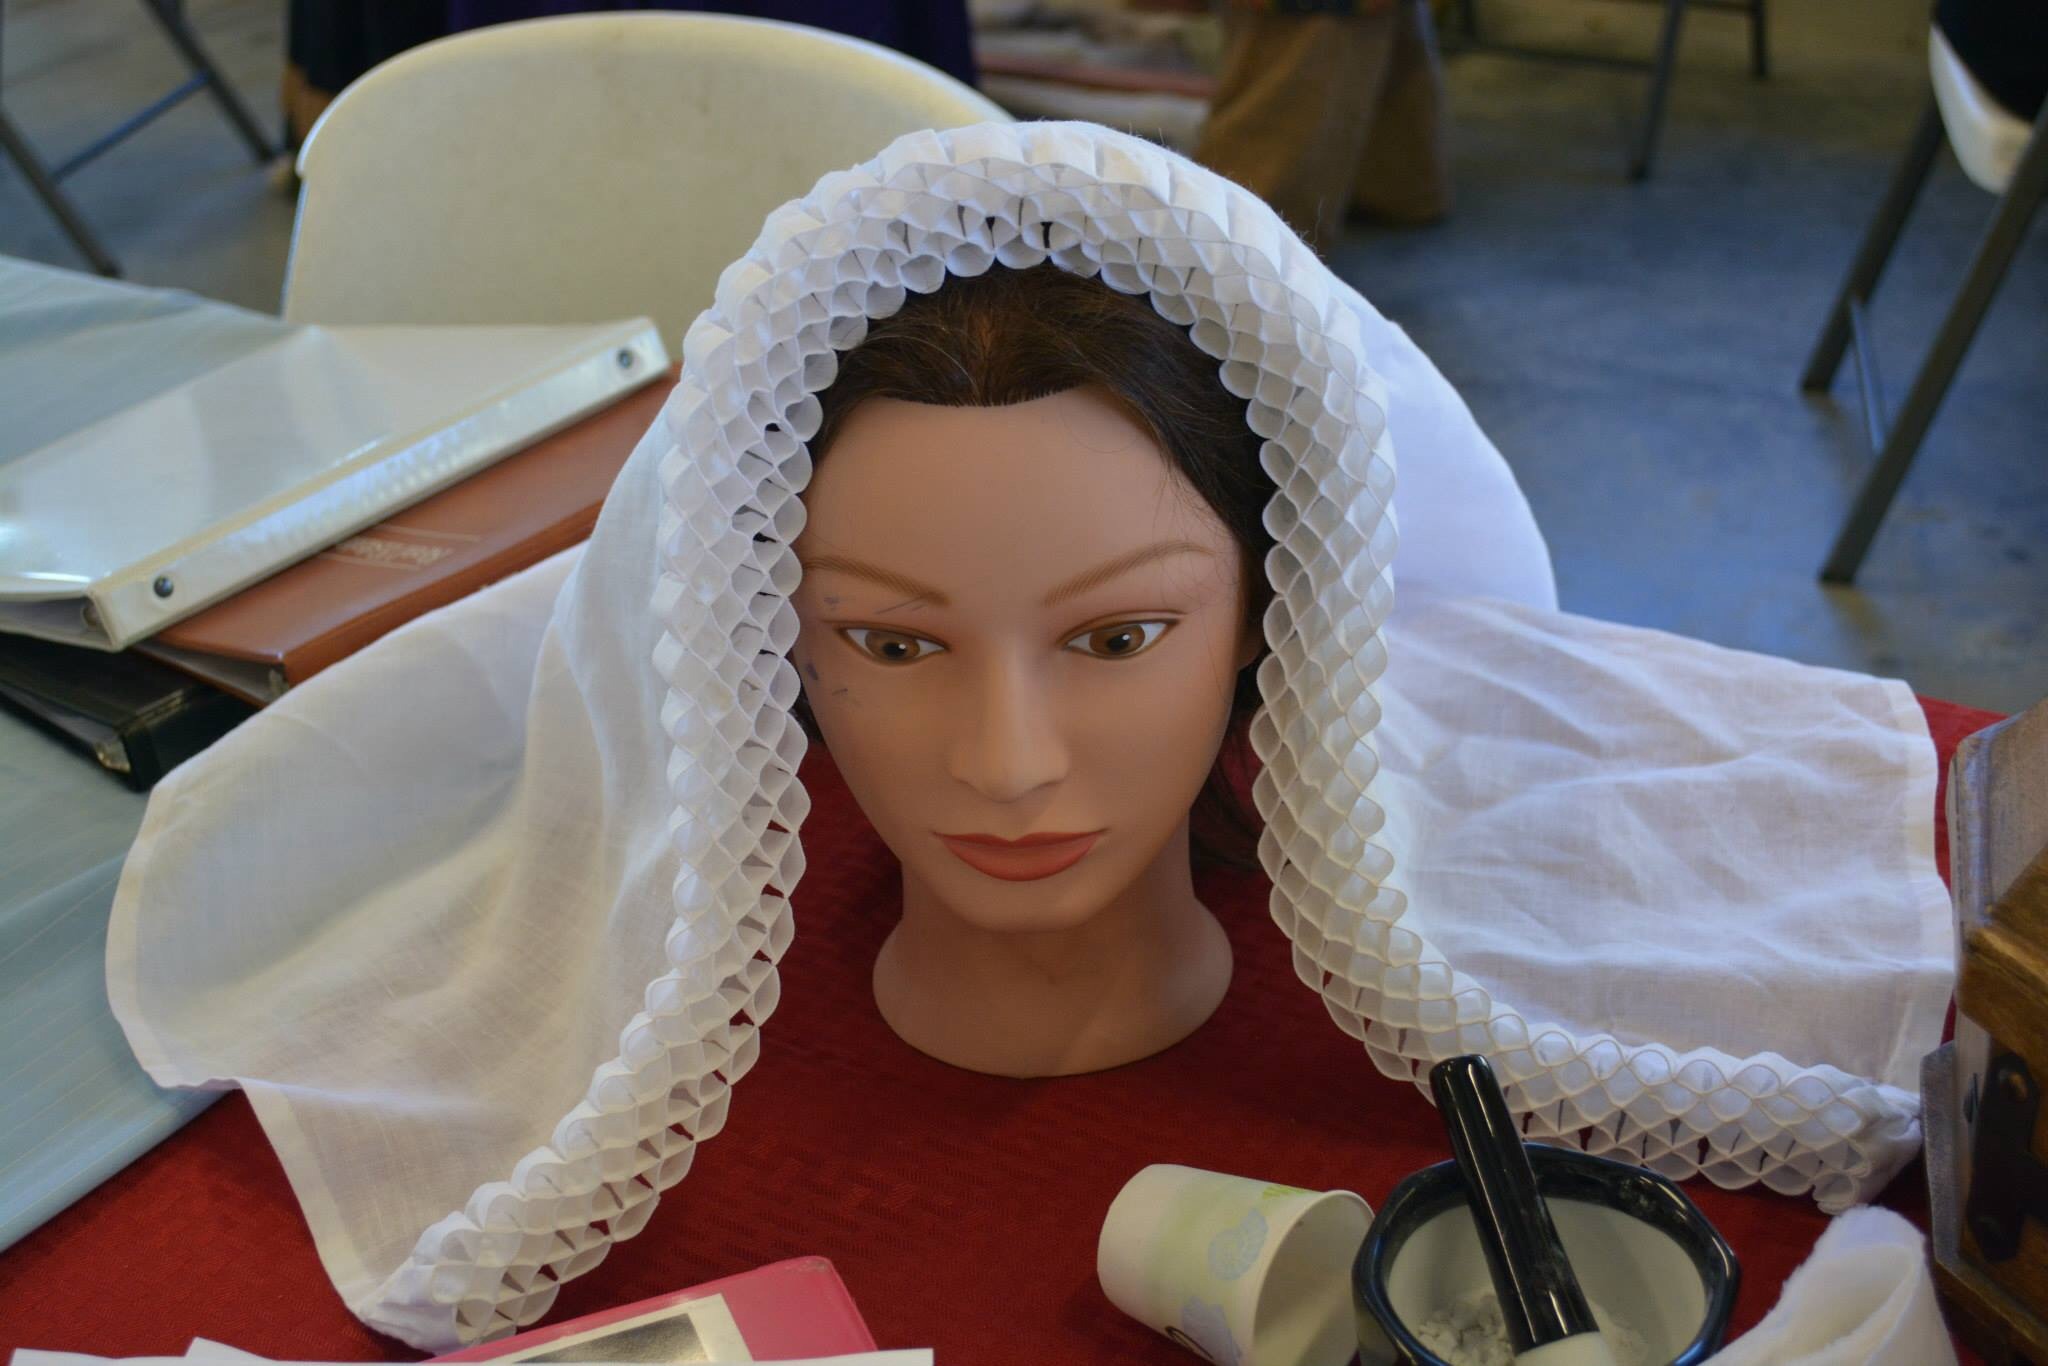 Carla, Ruffled veil of light weight linen in the style of 14-15th century effigies.